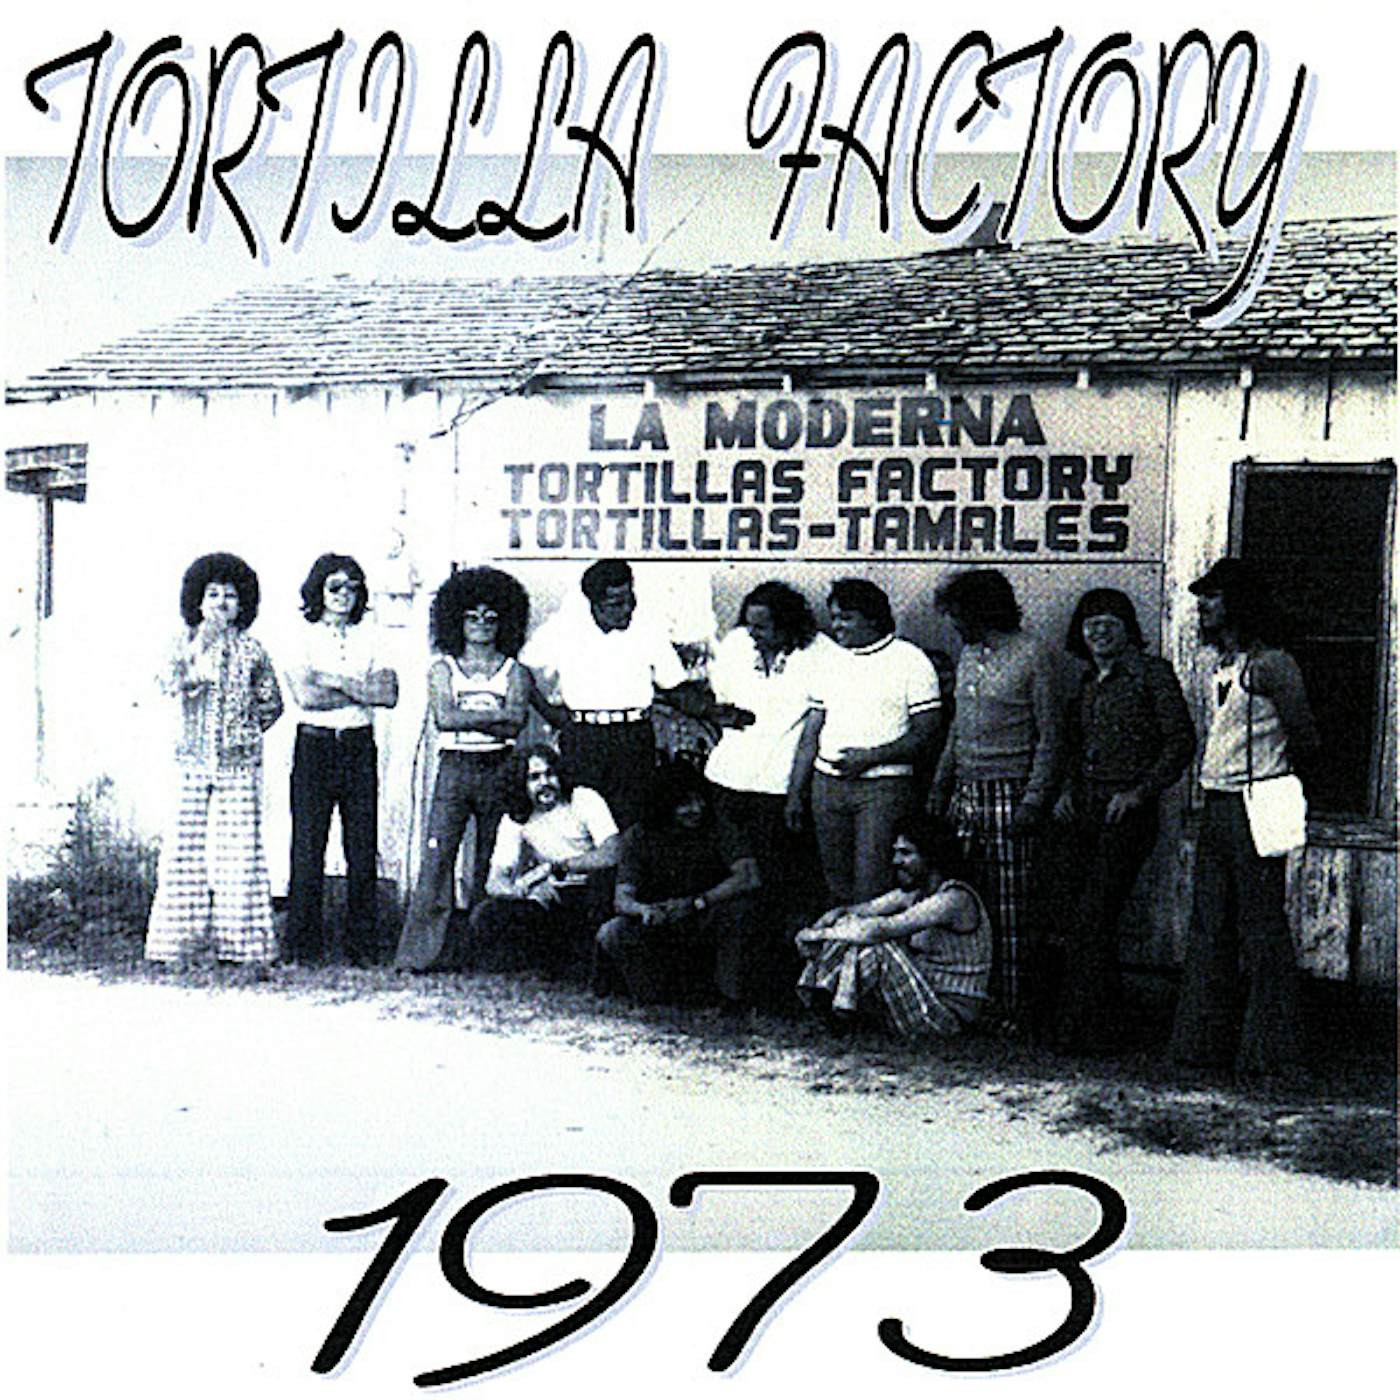 TORTILLA FACTORY 1973 CD